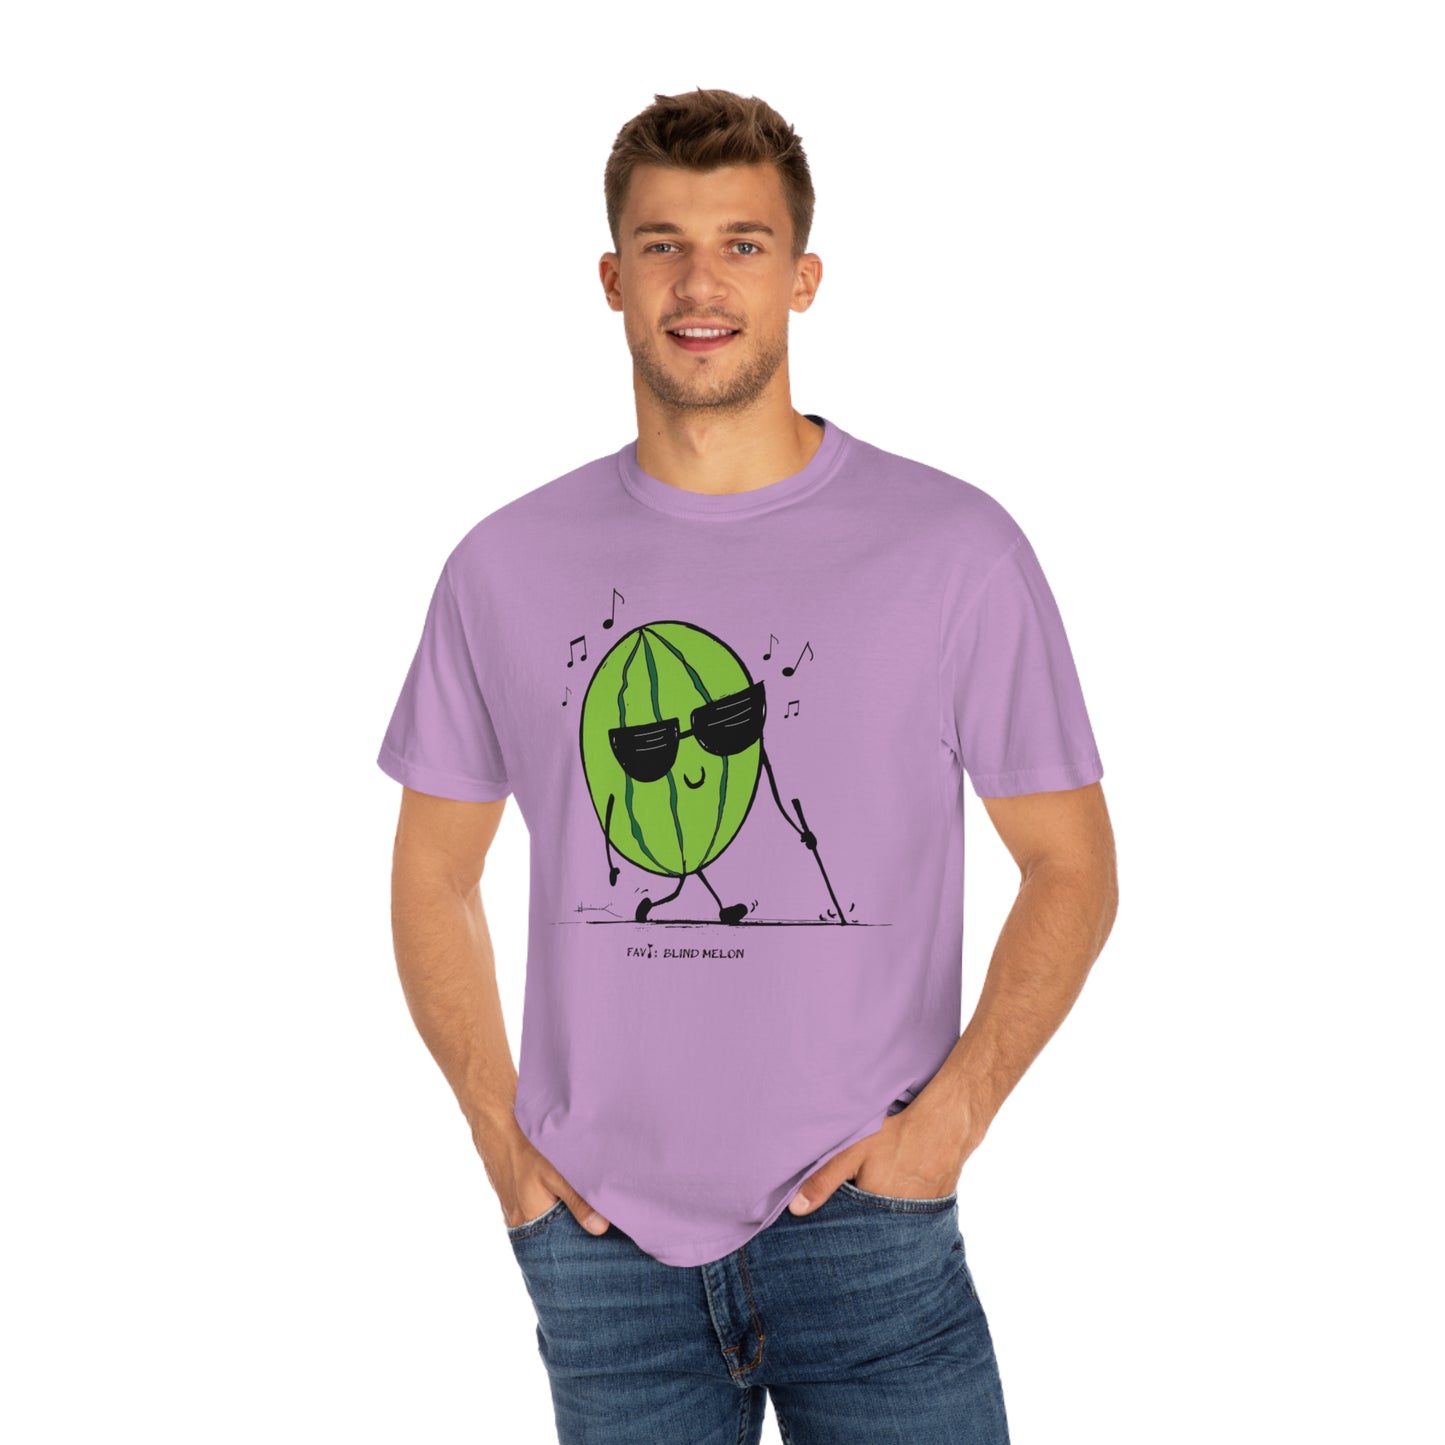 Cool Funny Illustrated T-shirt, Rock Band Inspiration Blind Melon, cool design illustration